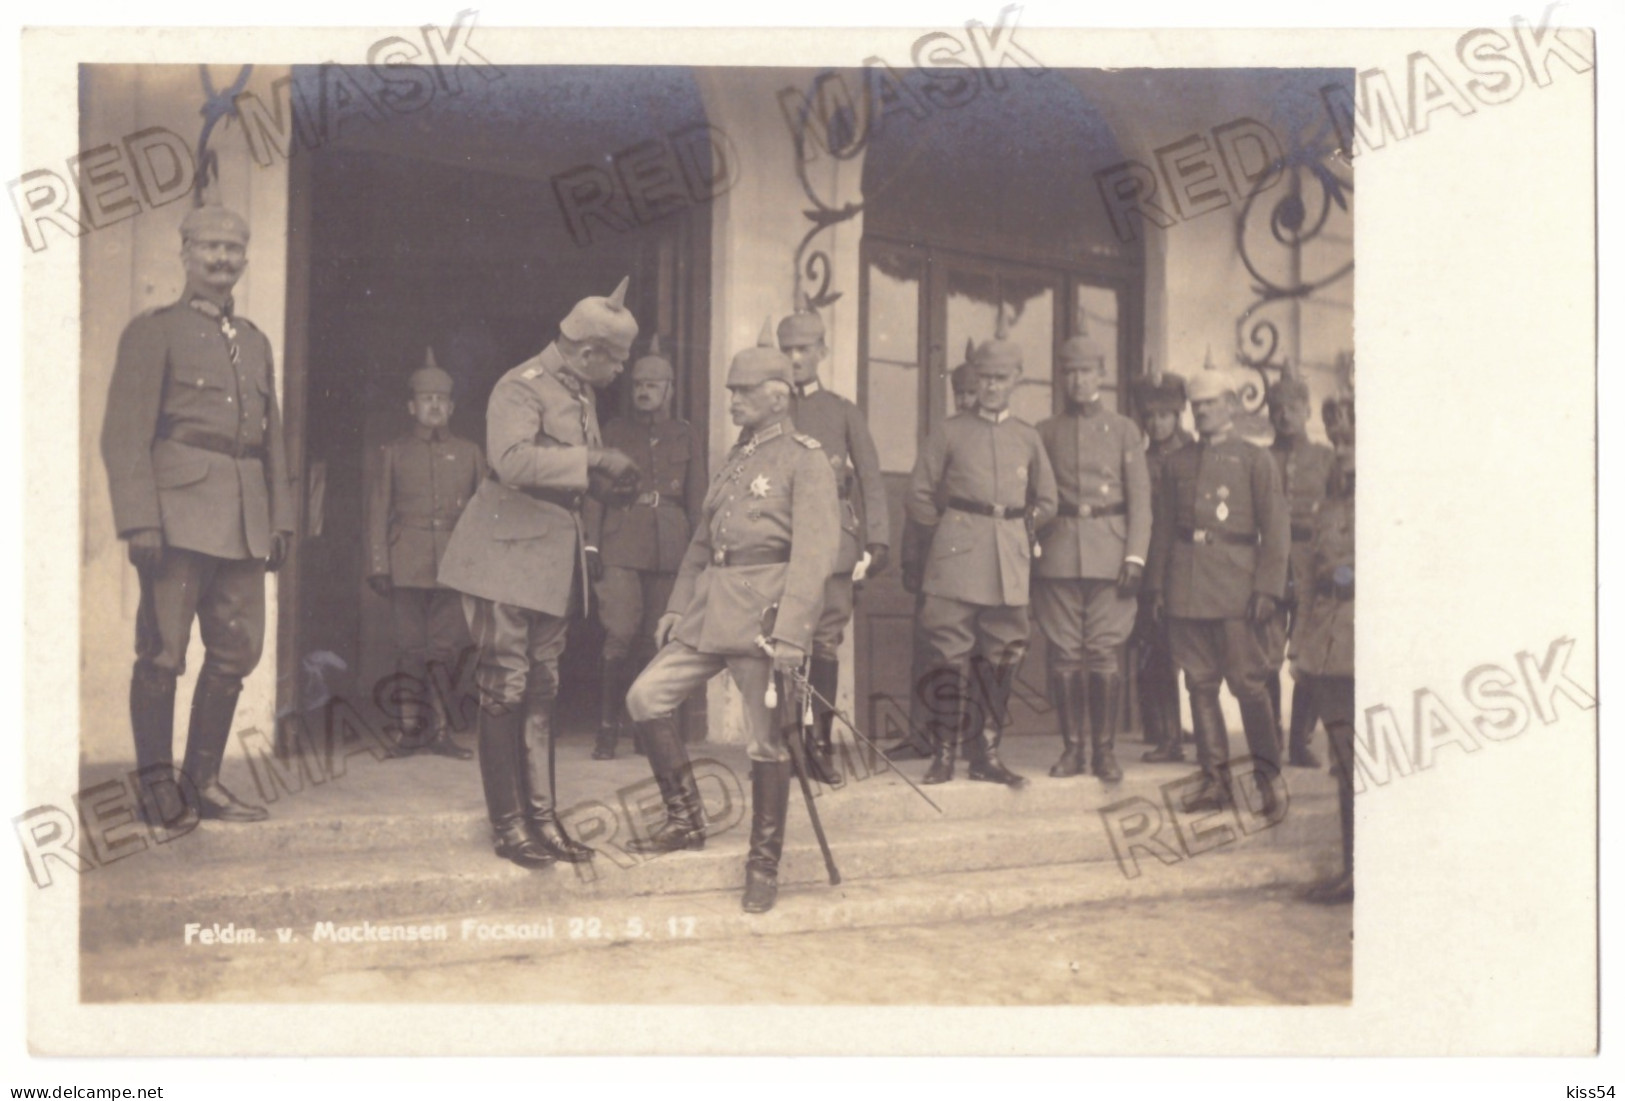 RO 33 - 21086 FOCSANI, G-ral Mackensen, Military, Romania - Old Postcard, Real Photo - Unused - 1917 - Rumänien